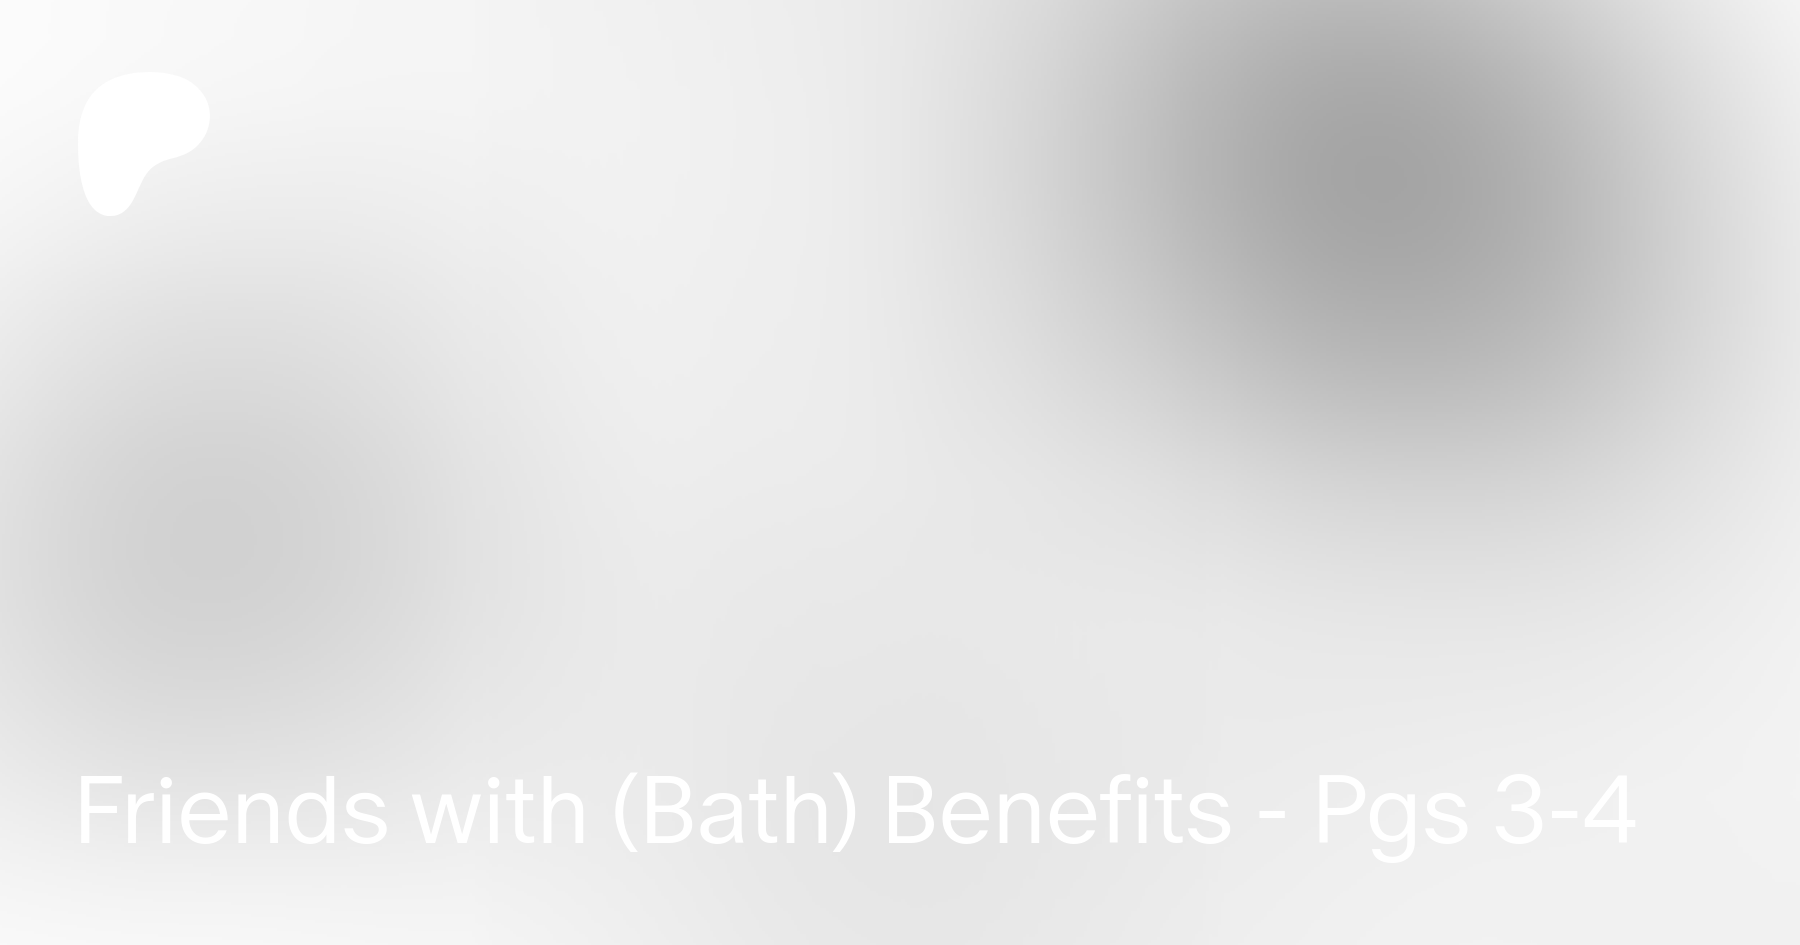 Friends with bath benefits